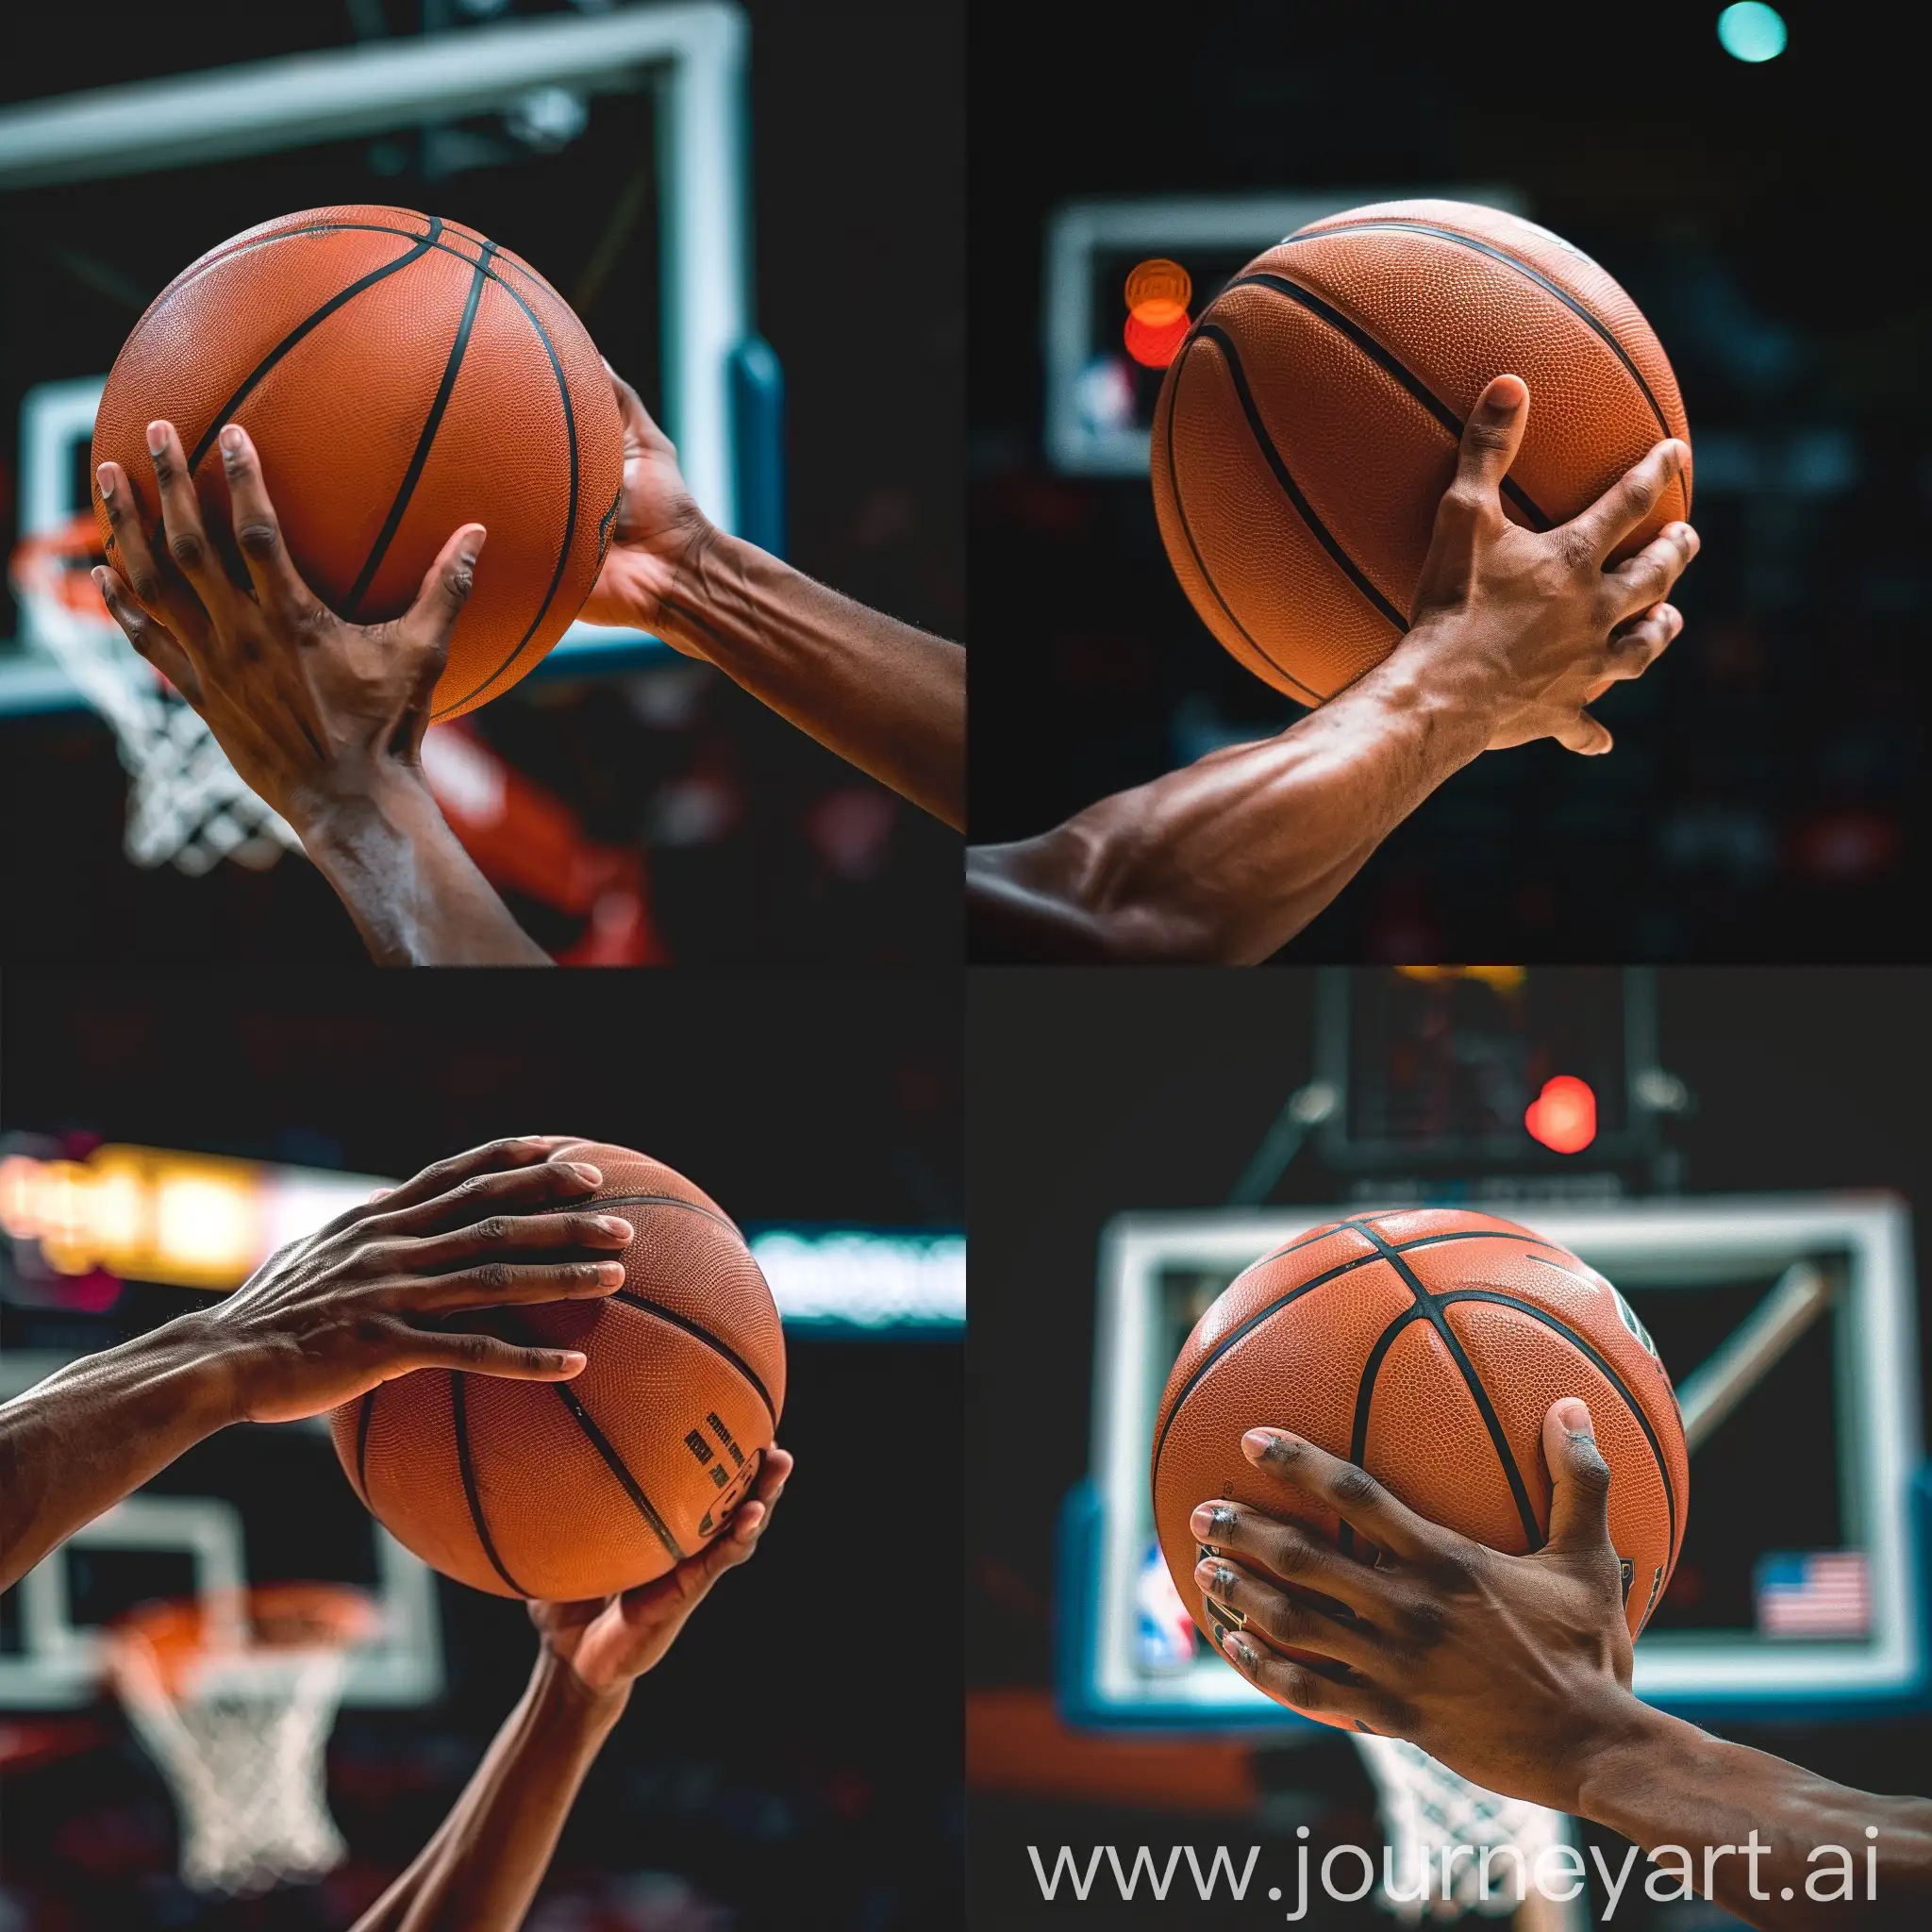 Basketball-Layup-Technique-Hand-Demonstrating-Layup-Form